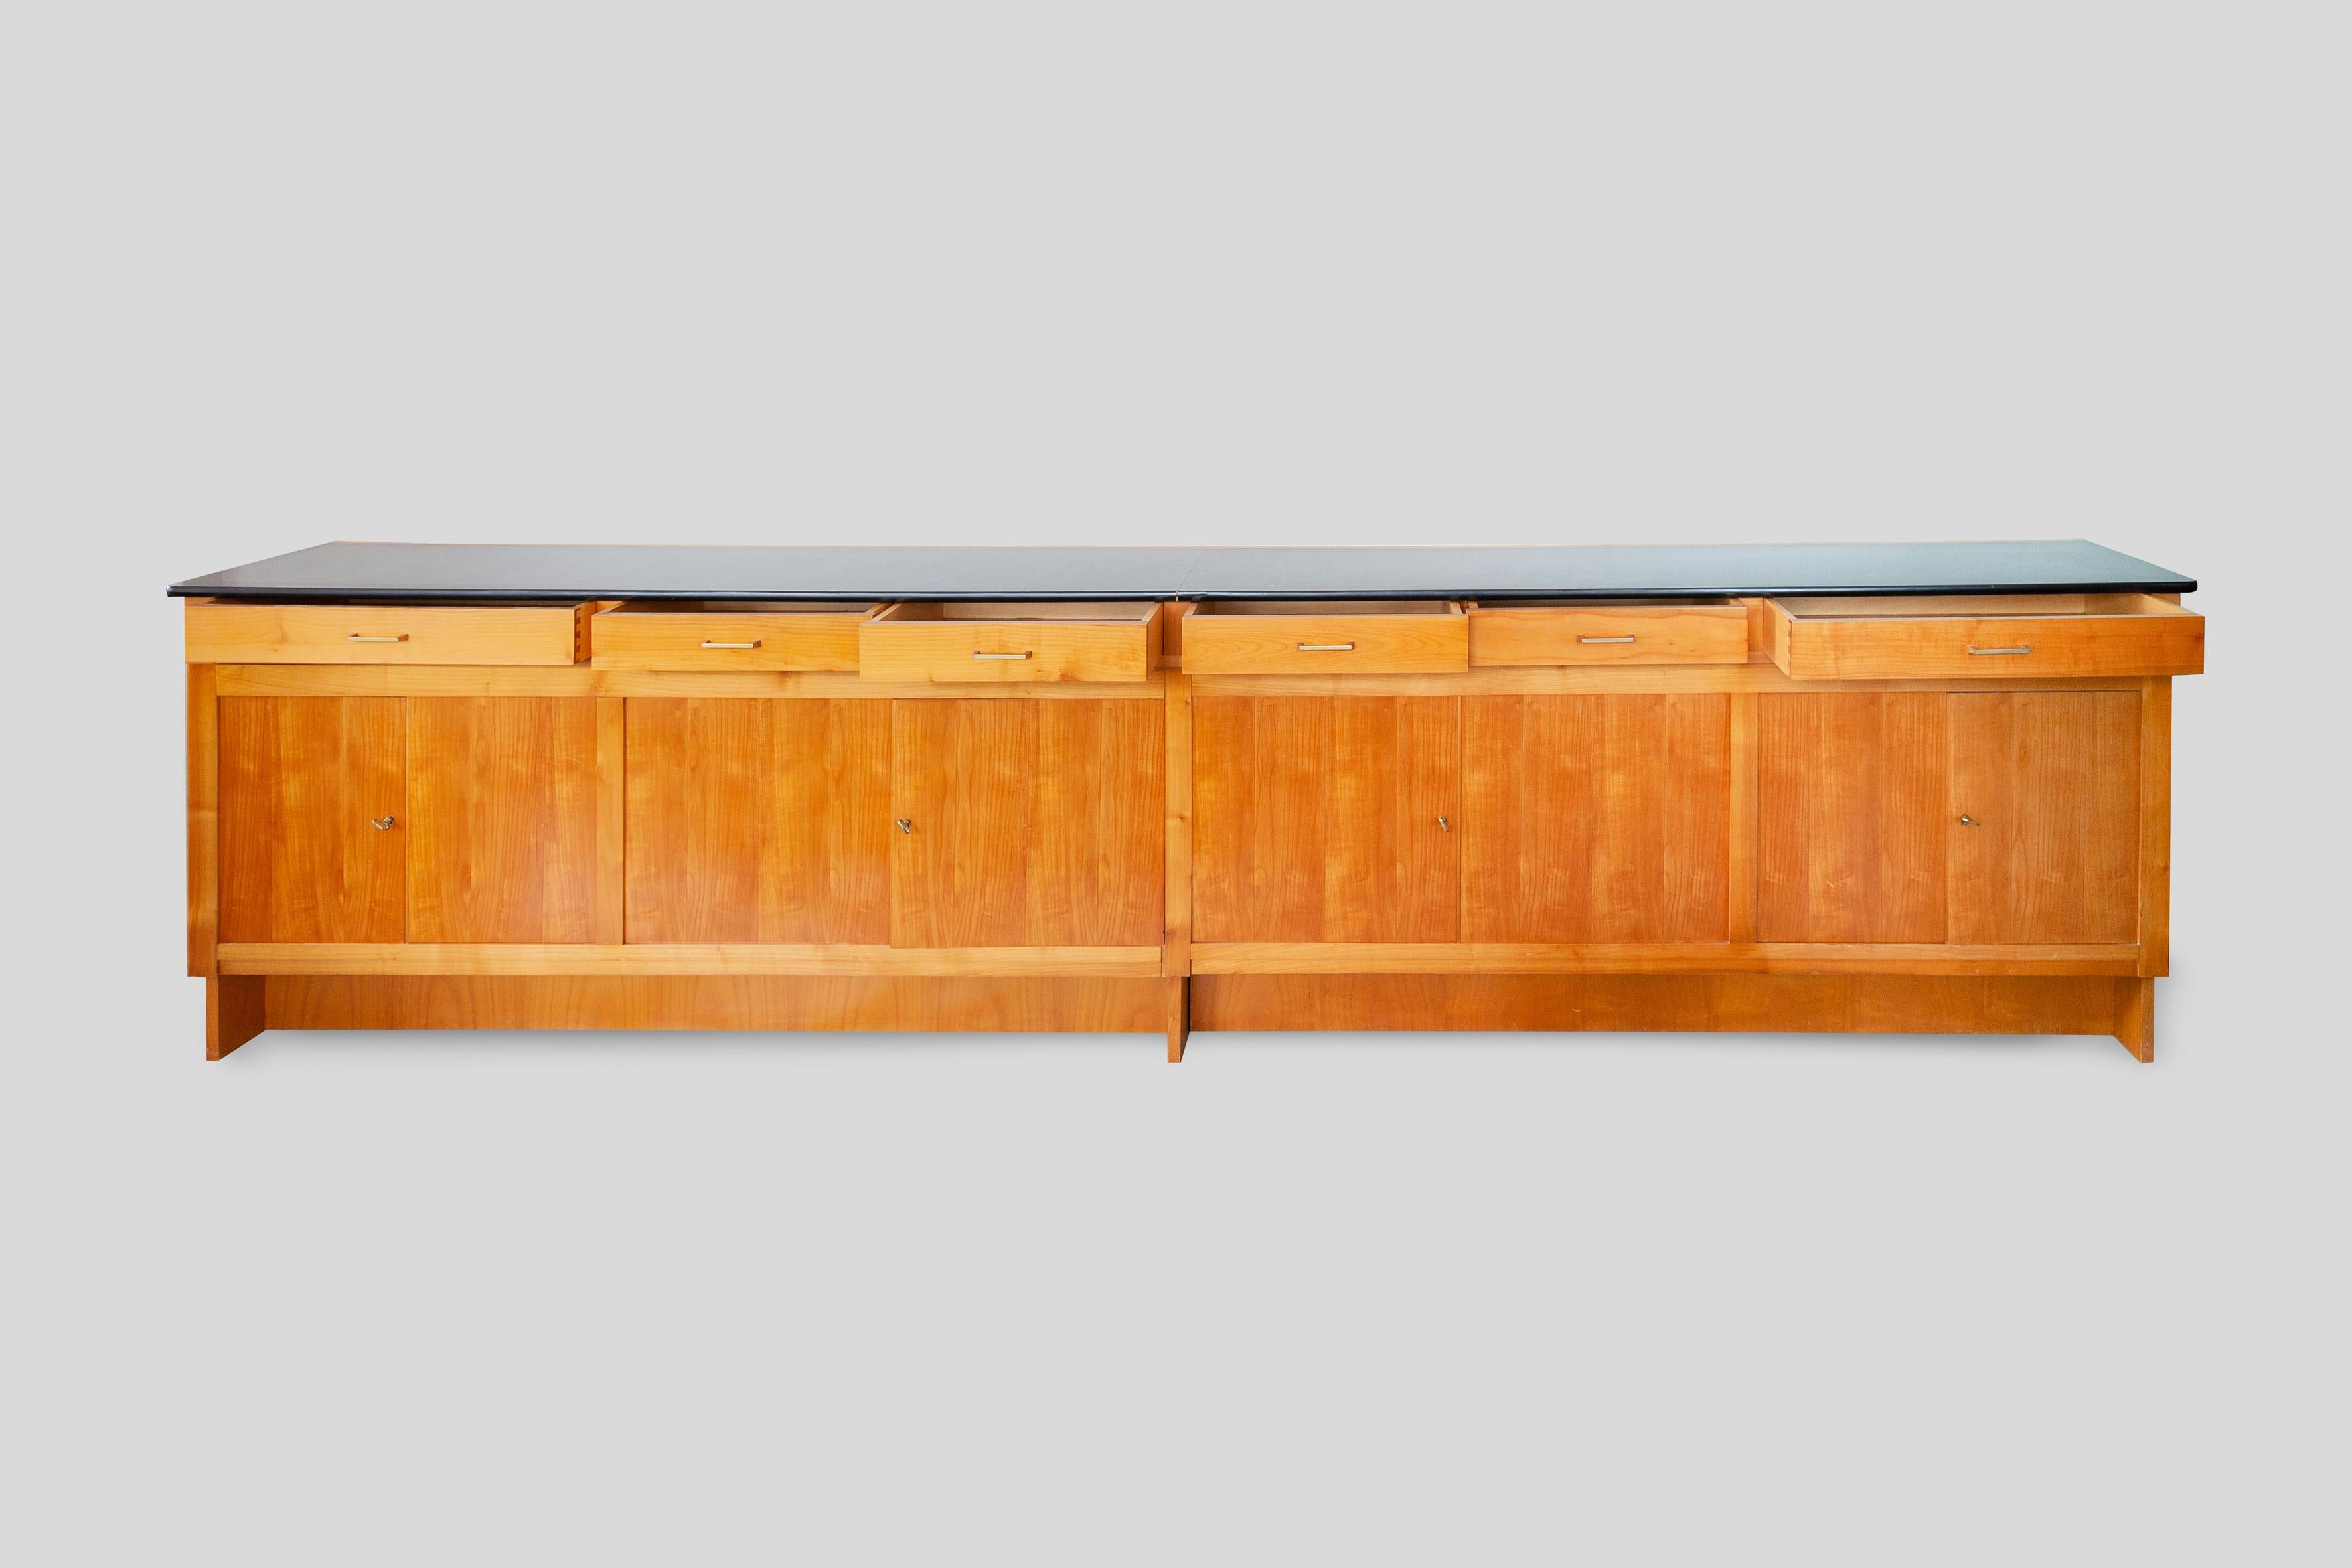 1960s sideboard